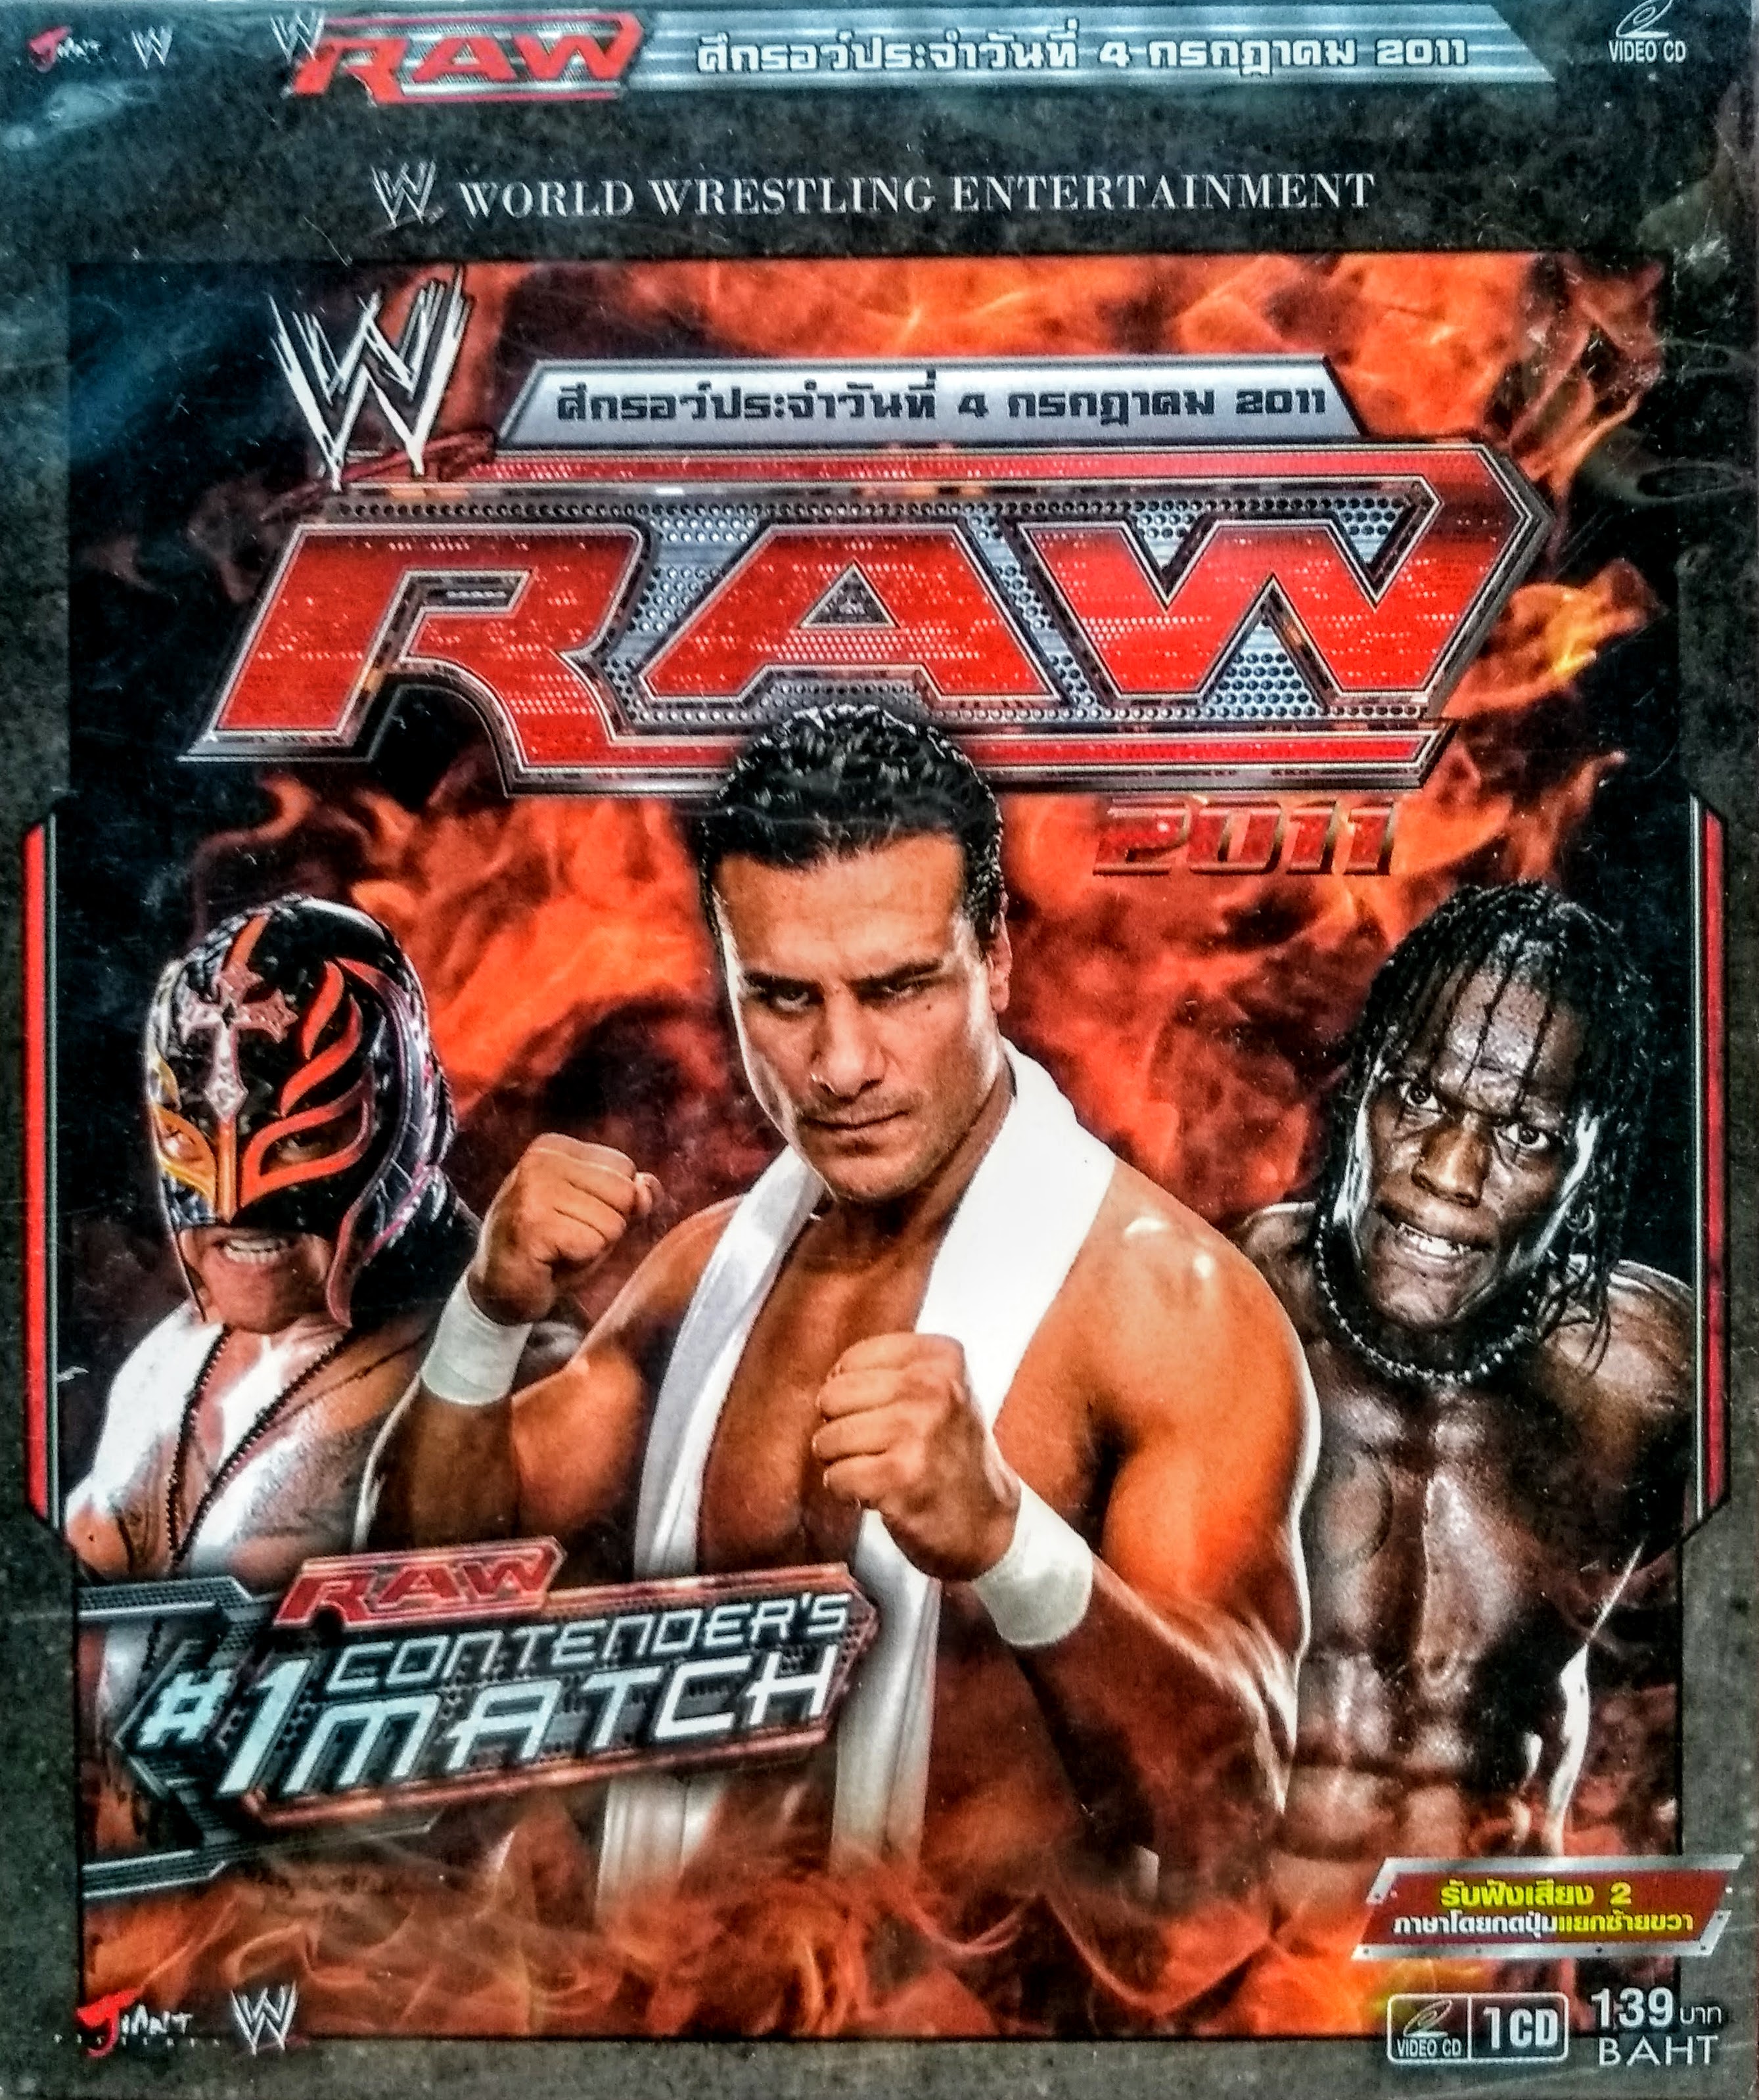 VCD​หนัง มวยปล้ำ WWE RAW 2011  #1 Contender's Match (พากษ์ไทย) - ซอง